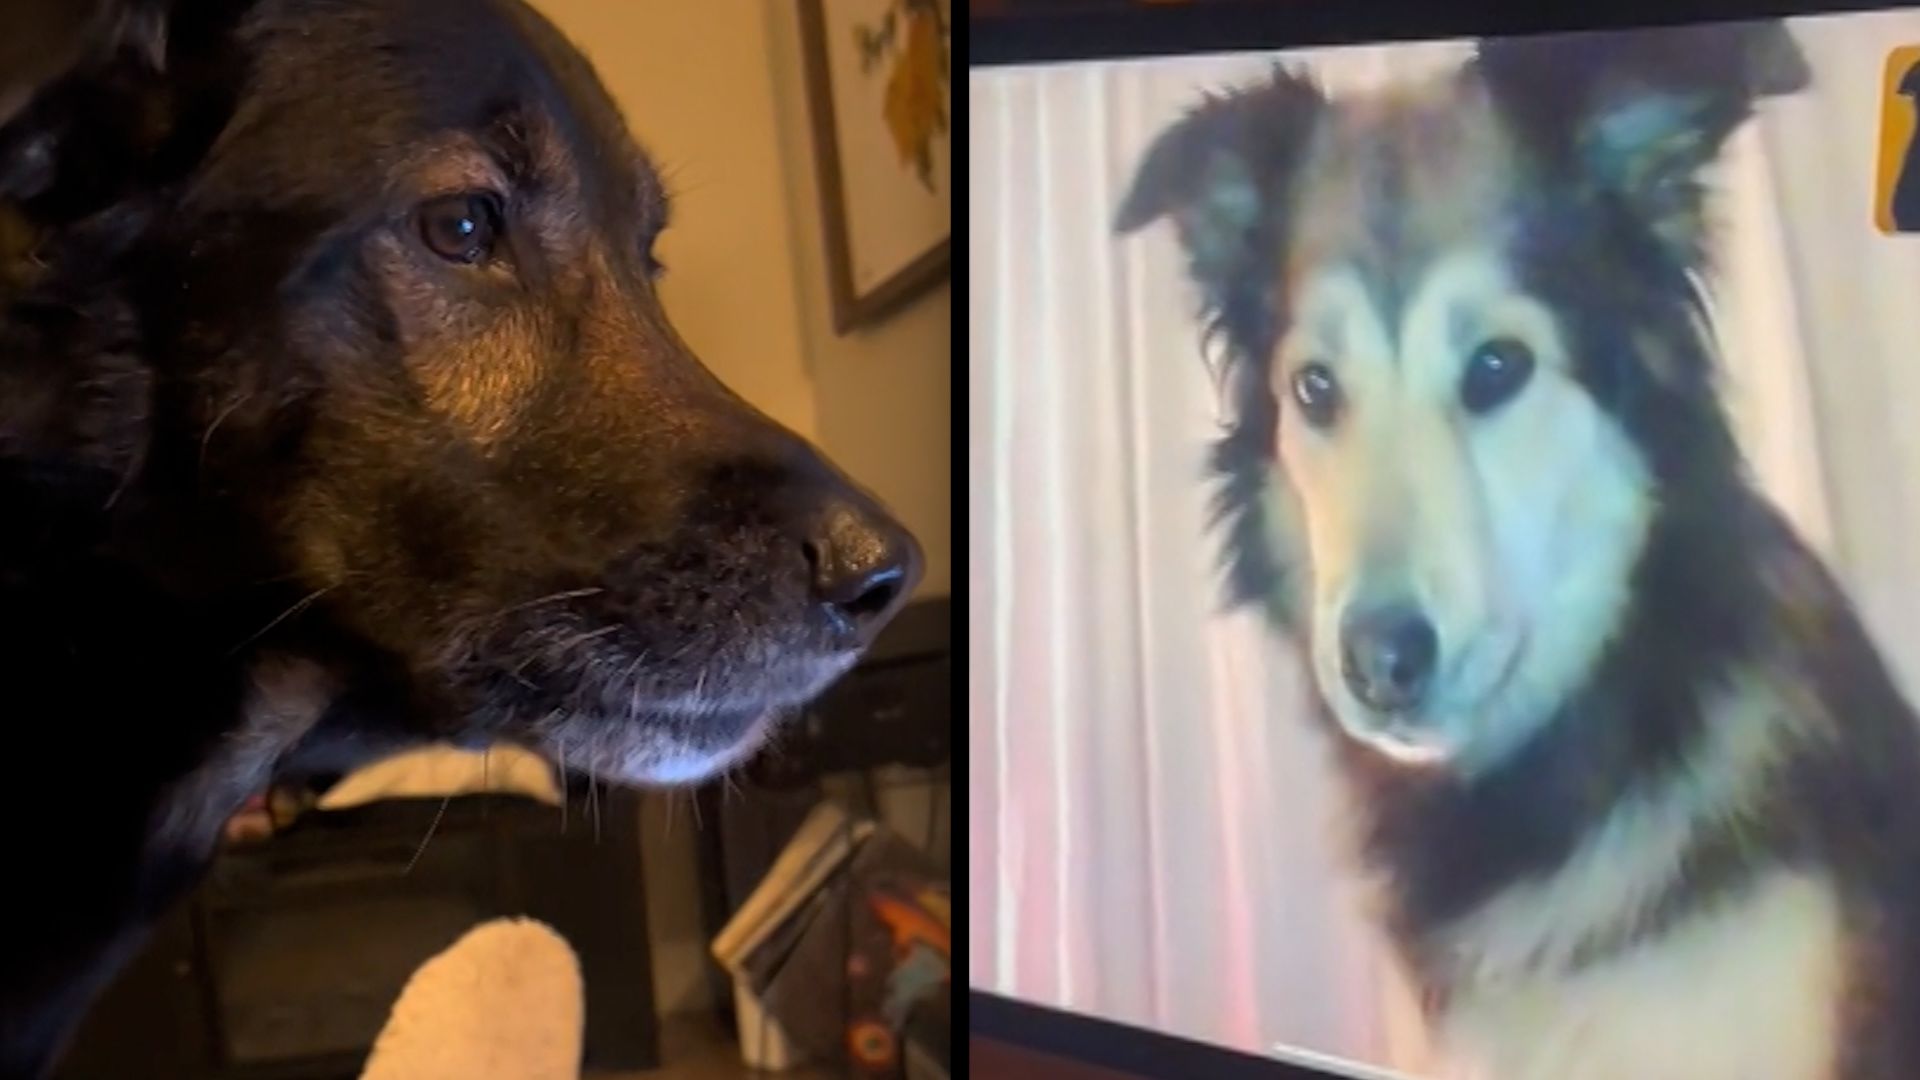 Dog spots friend on video call. His response went viral | CNN